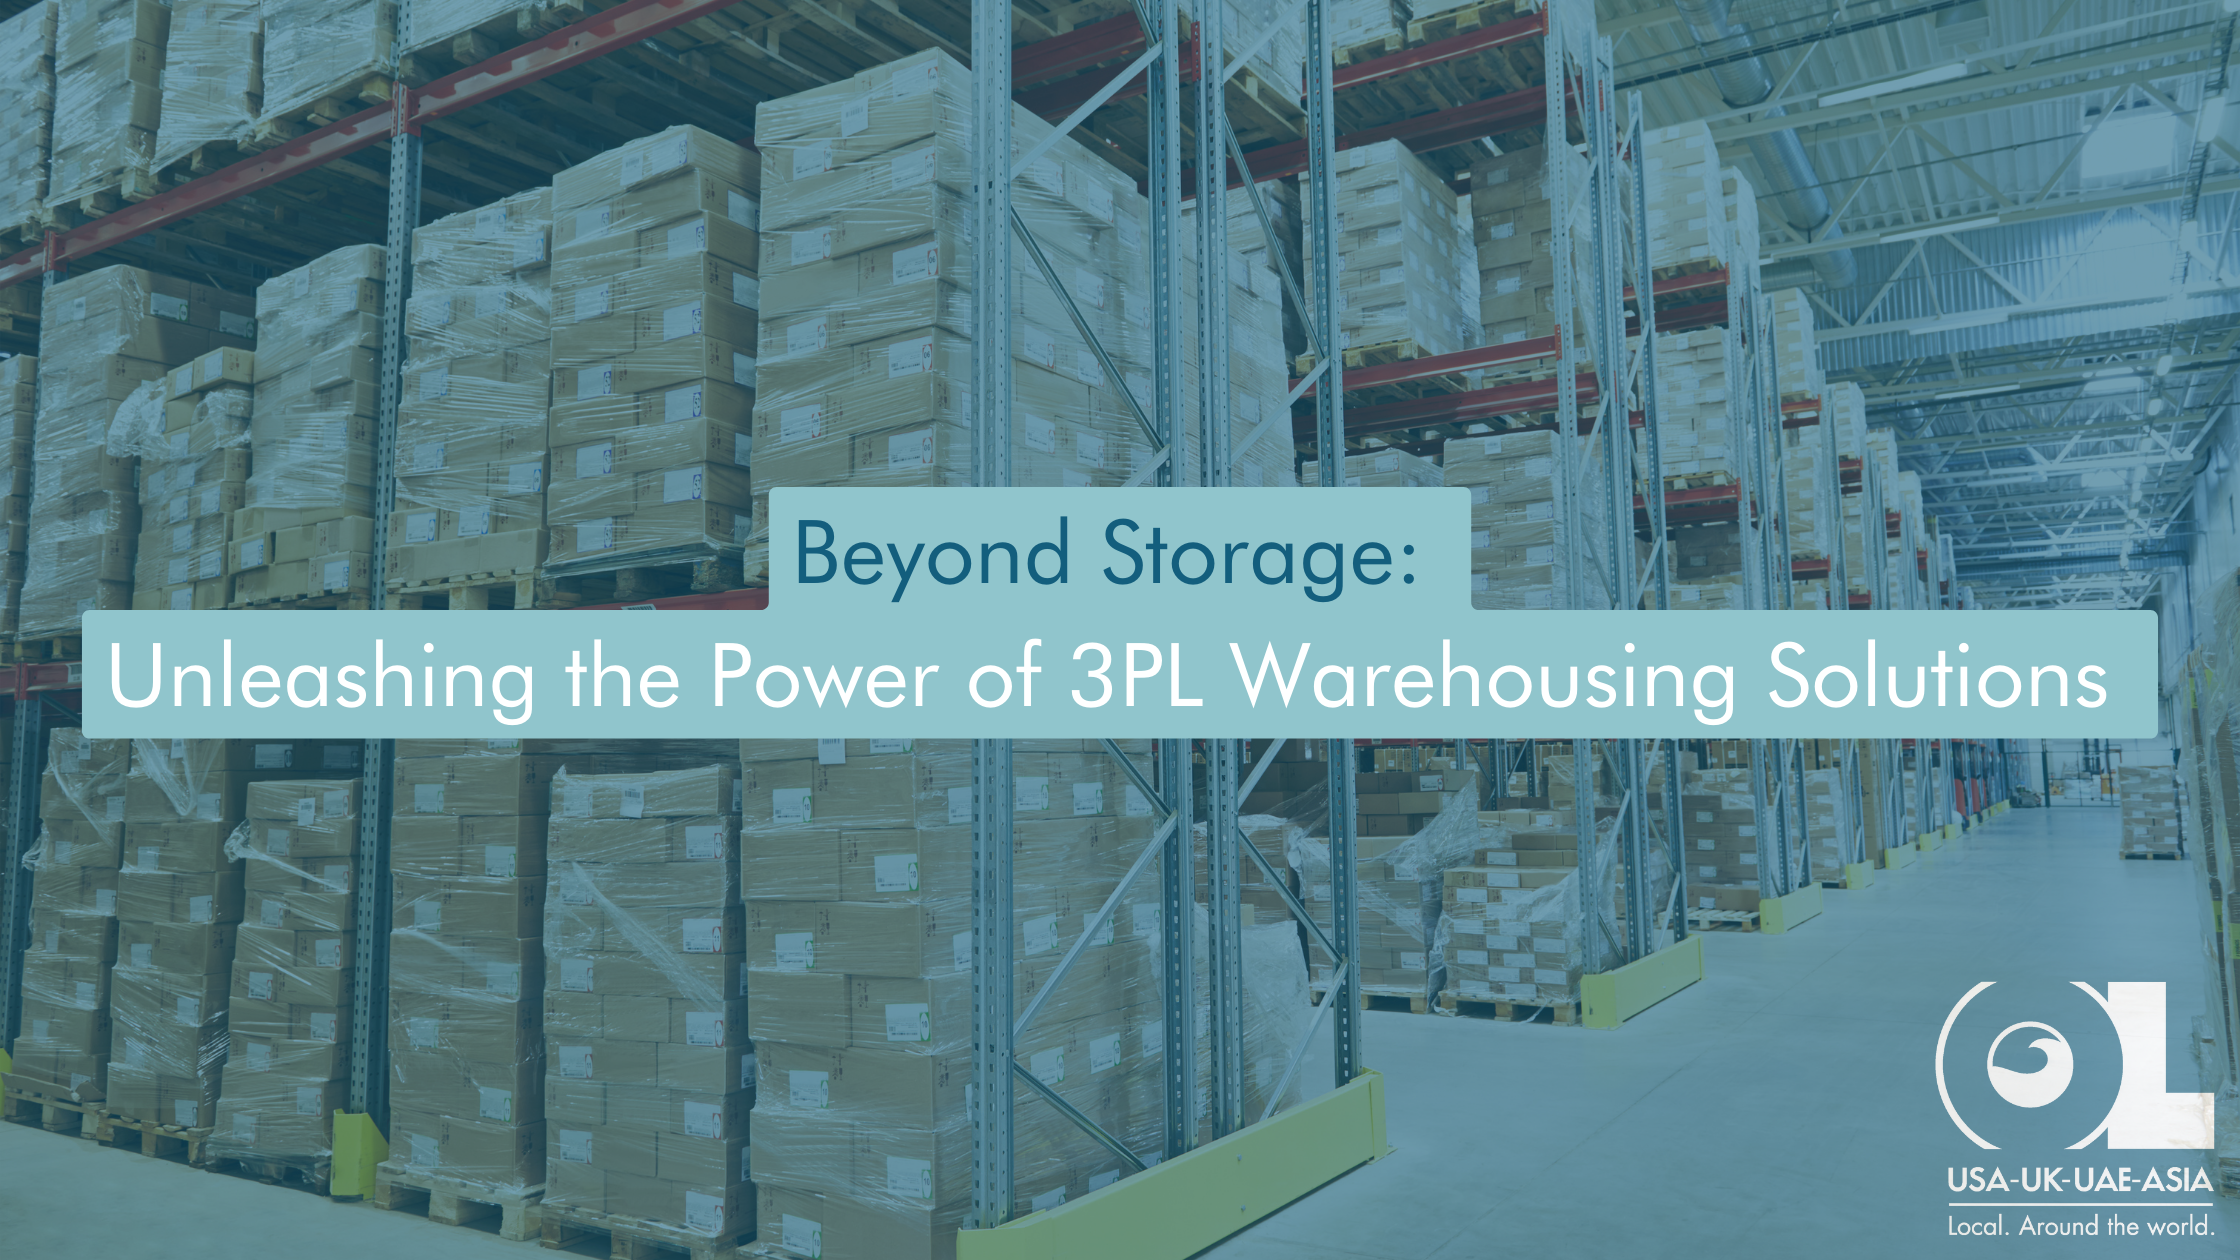 Warehousing & Storage Solutions